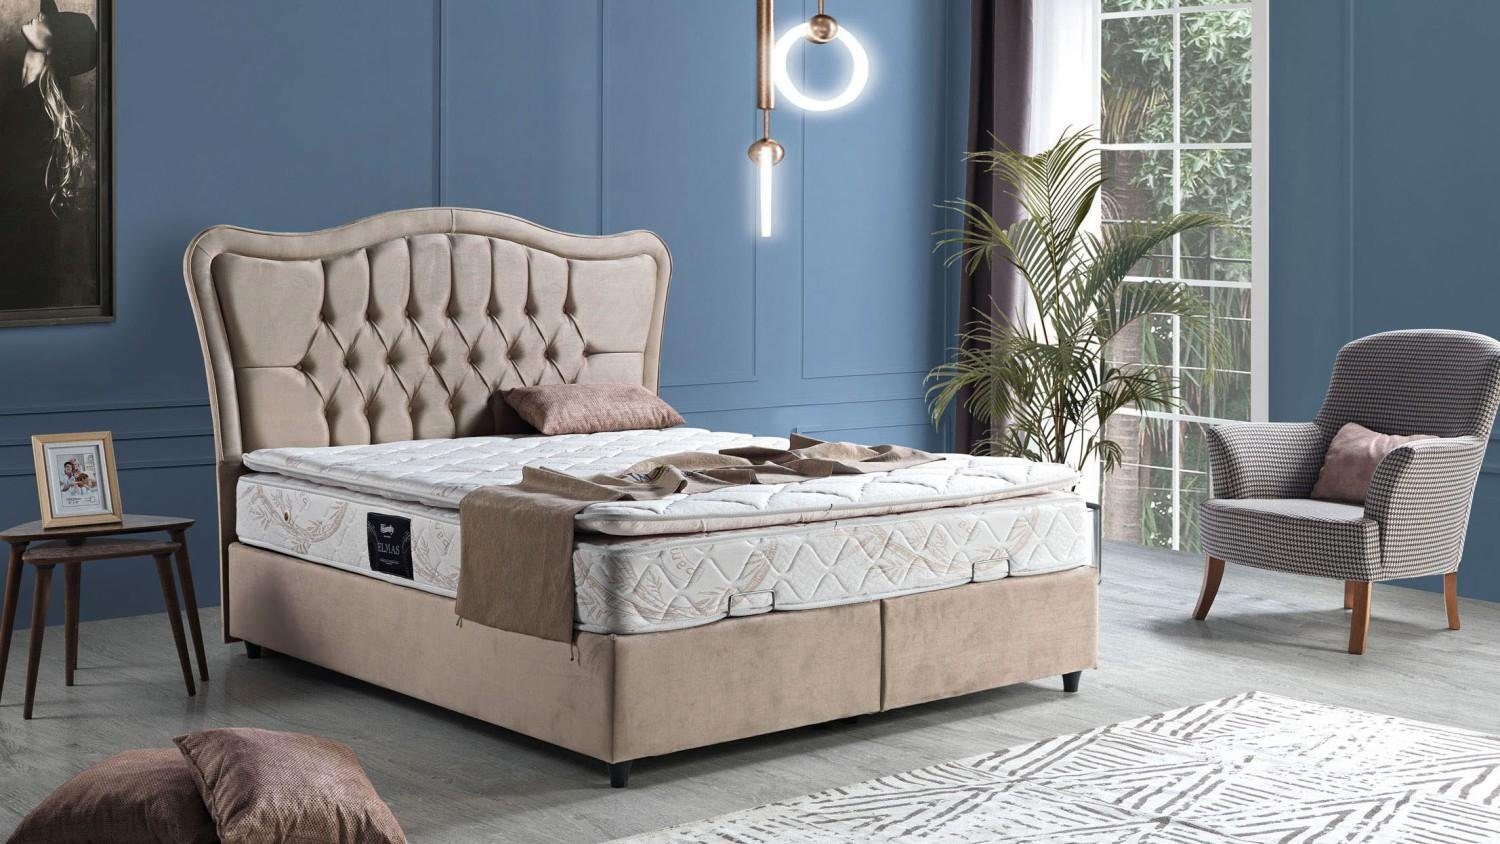 JVmoebel Bett Bett Design Betten Luxus Polster Schlafzimmer Möbel Modern Beige (Bett), Made In Europe